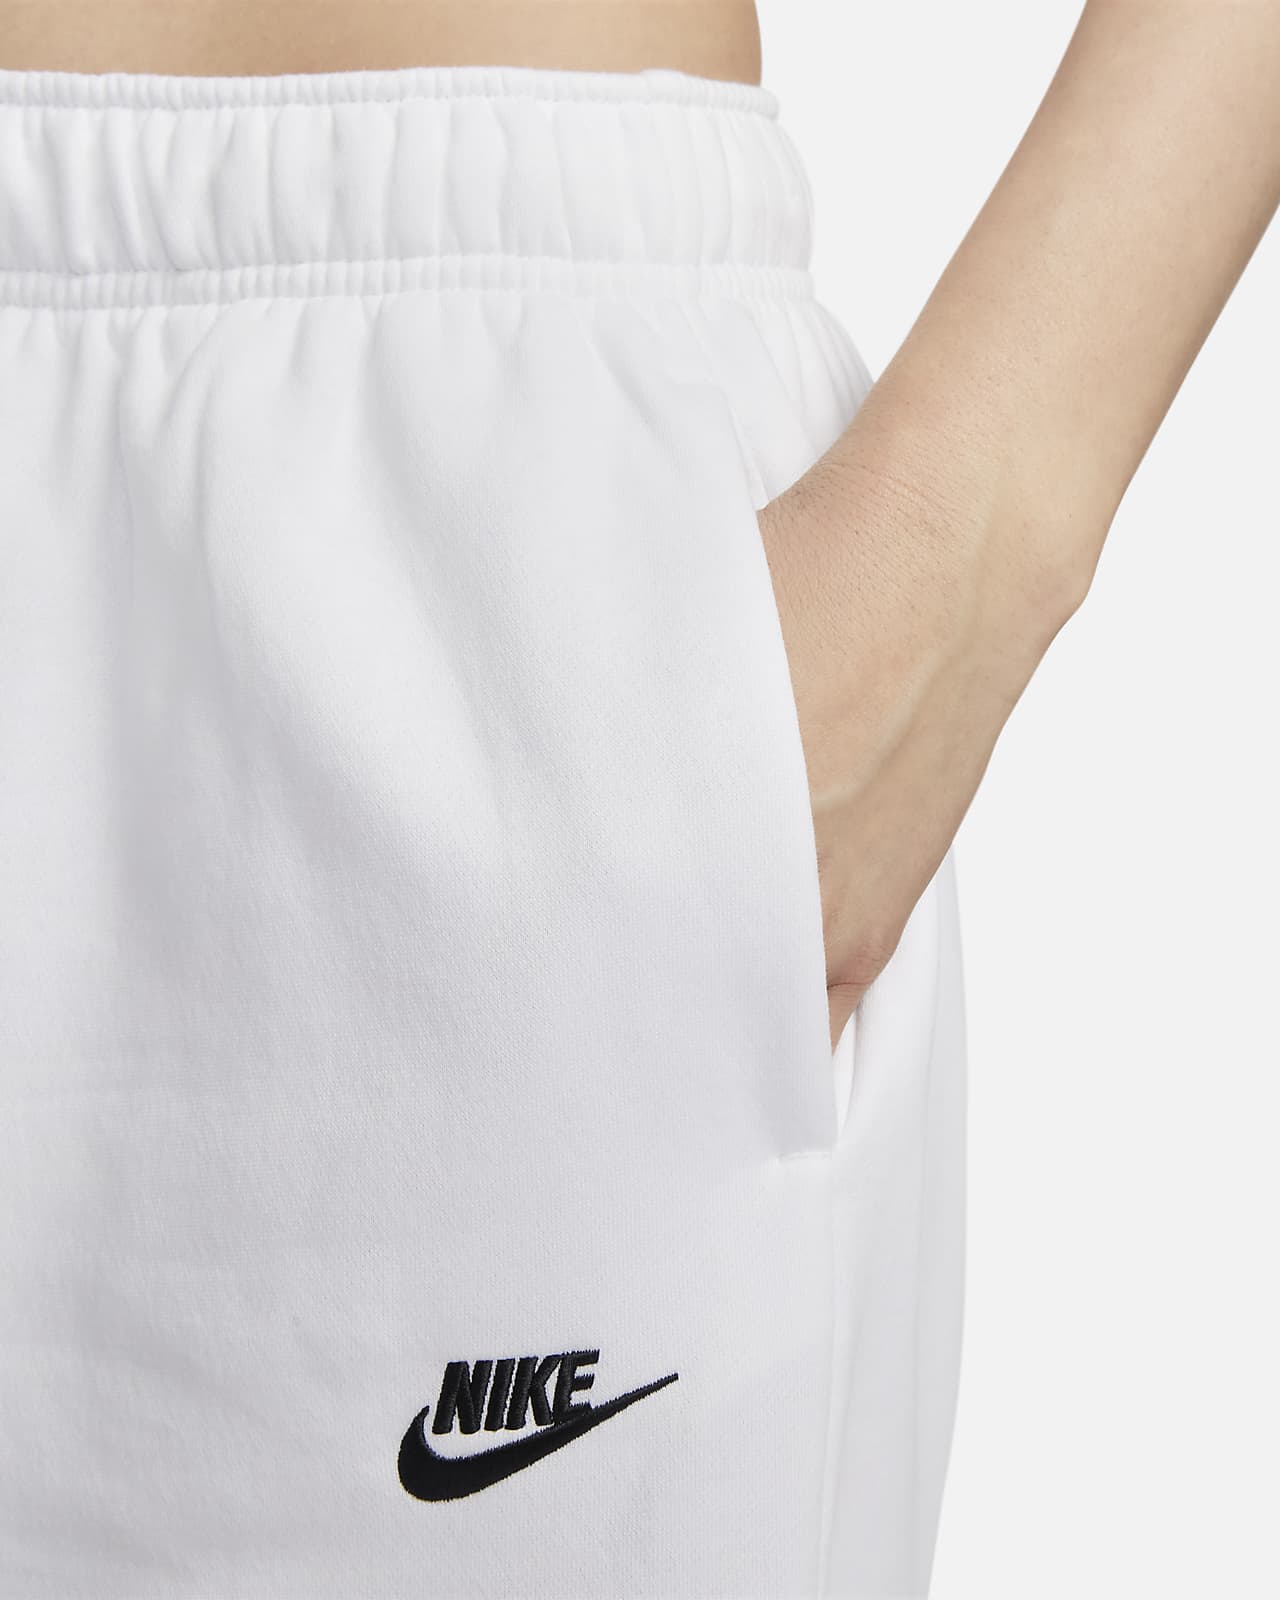 Nike Tech Fleece Gray Sweatpants-Grey  Nike women sweatpants, Nike  sweatpants outfit, Nike tech fleece